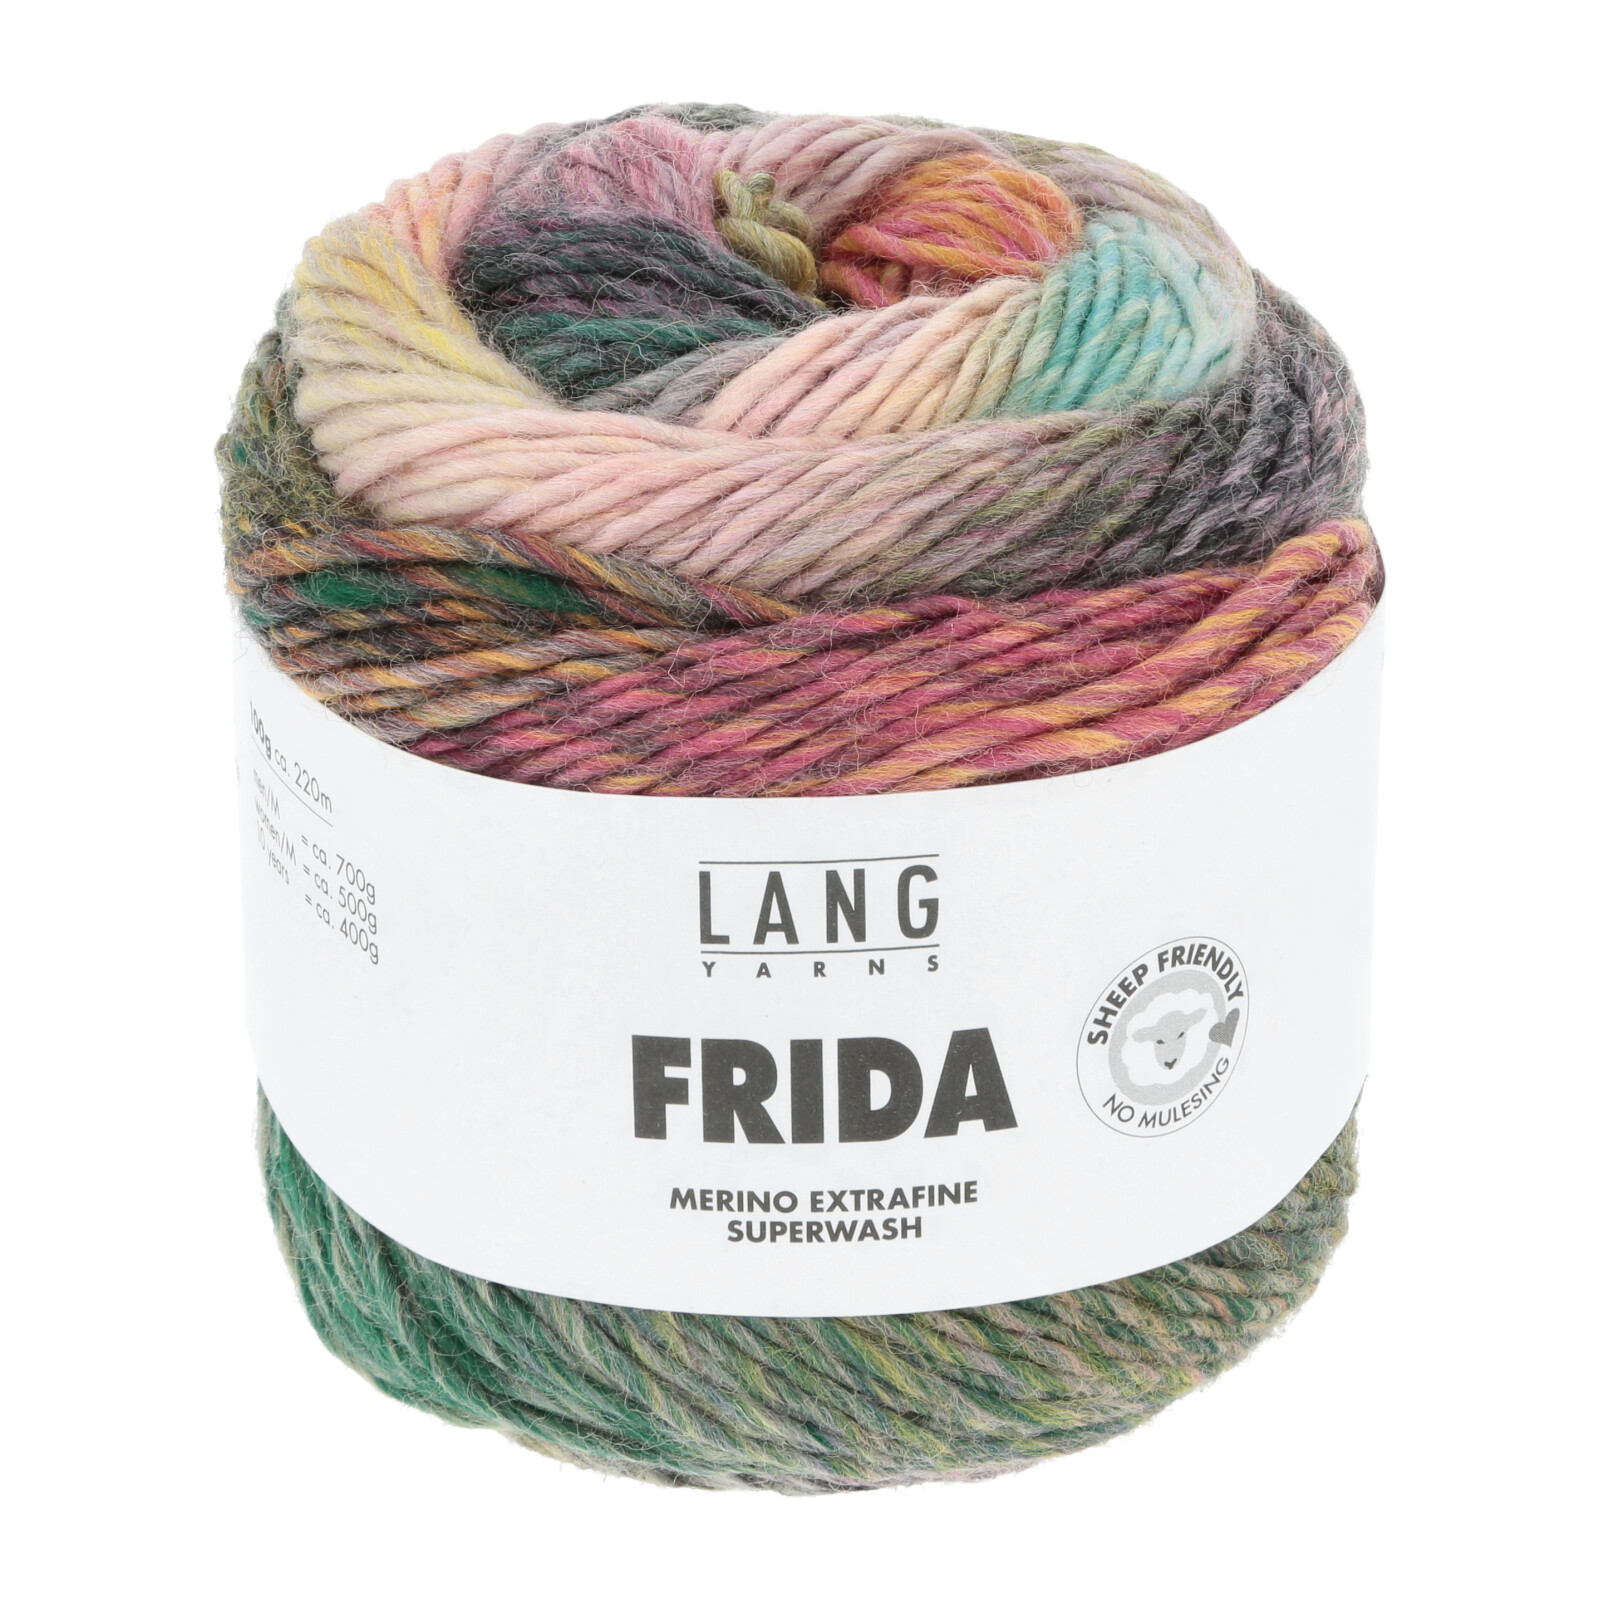 Tela lino + algodón color natural - la oveja Lola